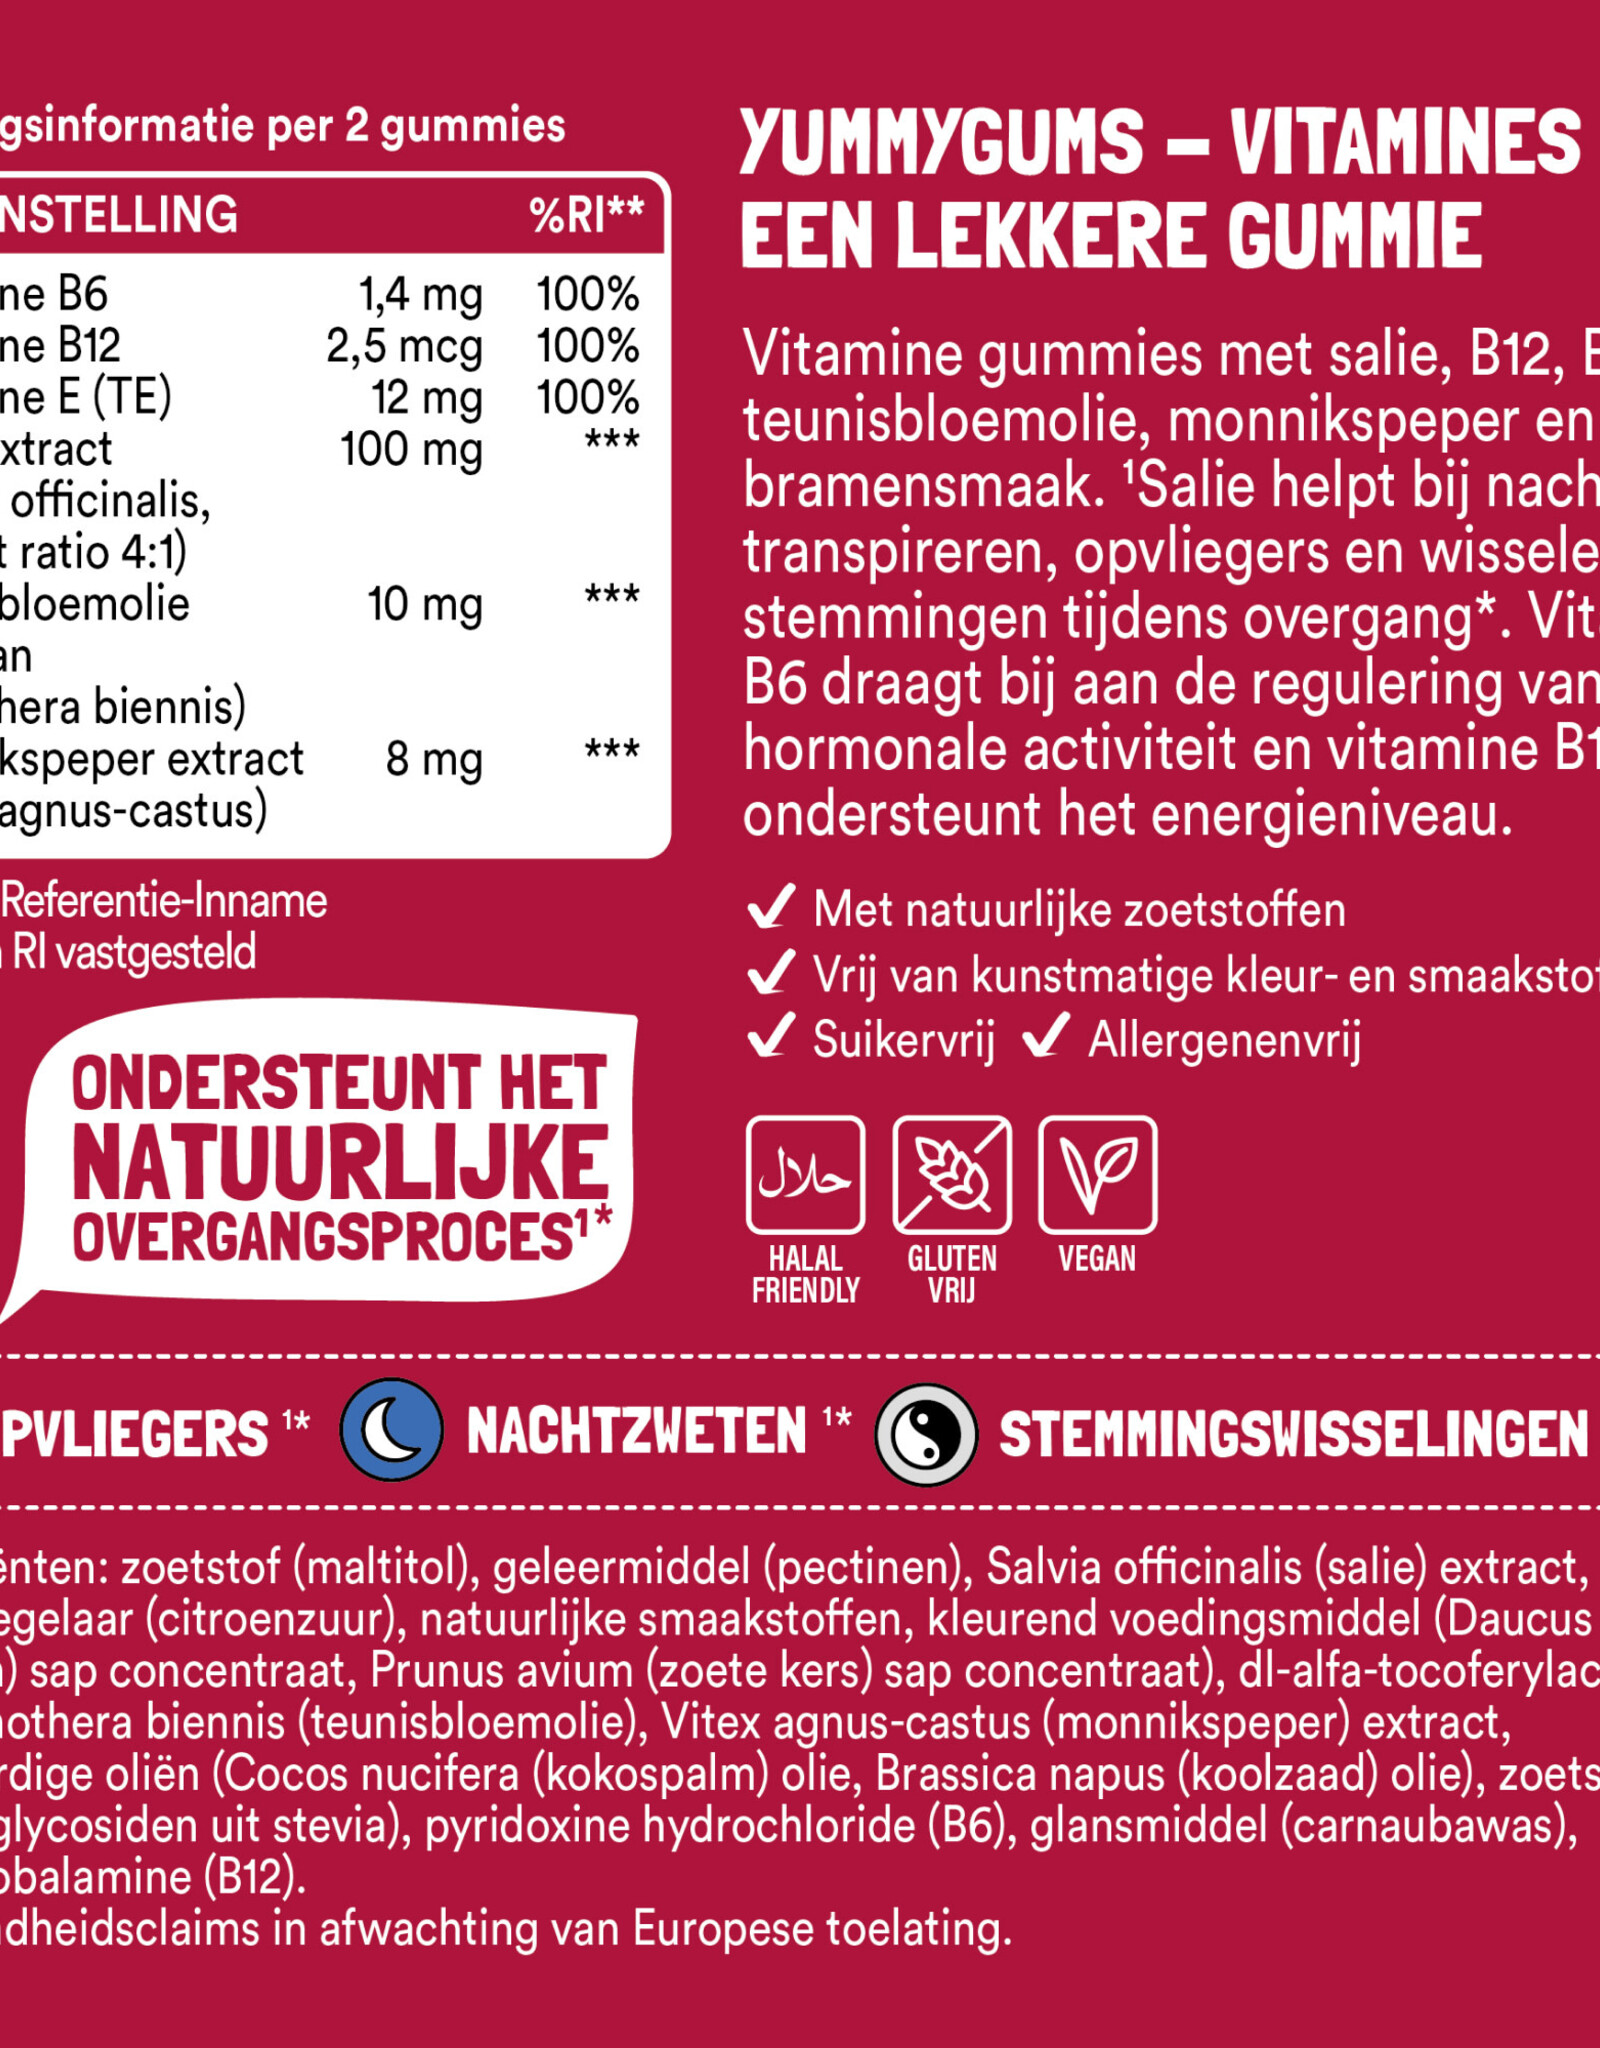 yummygums MENOPAUSE GUMMIES - 60 vitamine gummies 180g